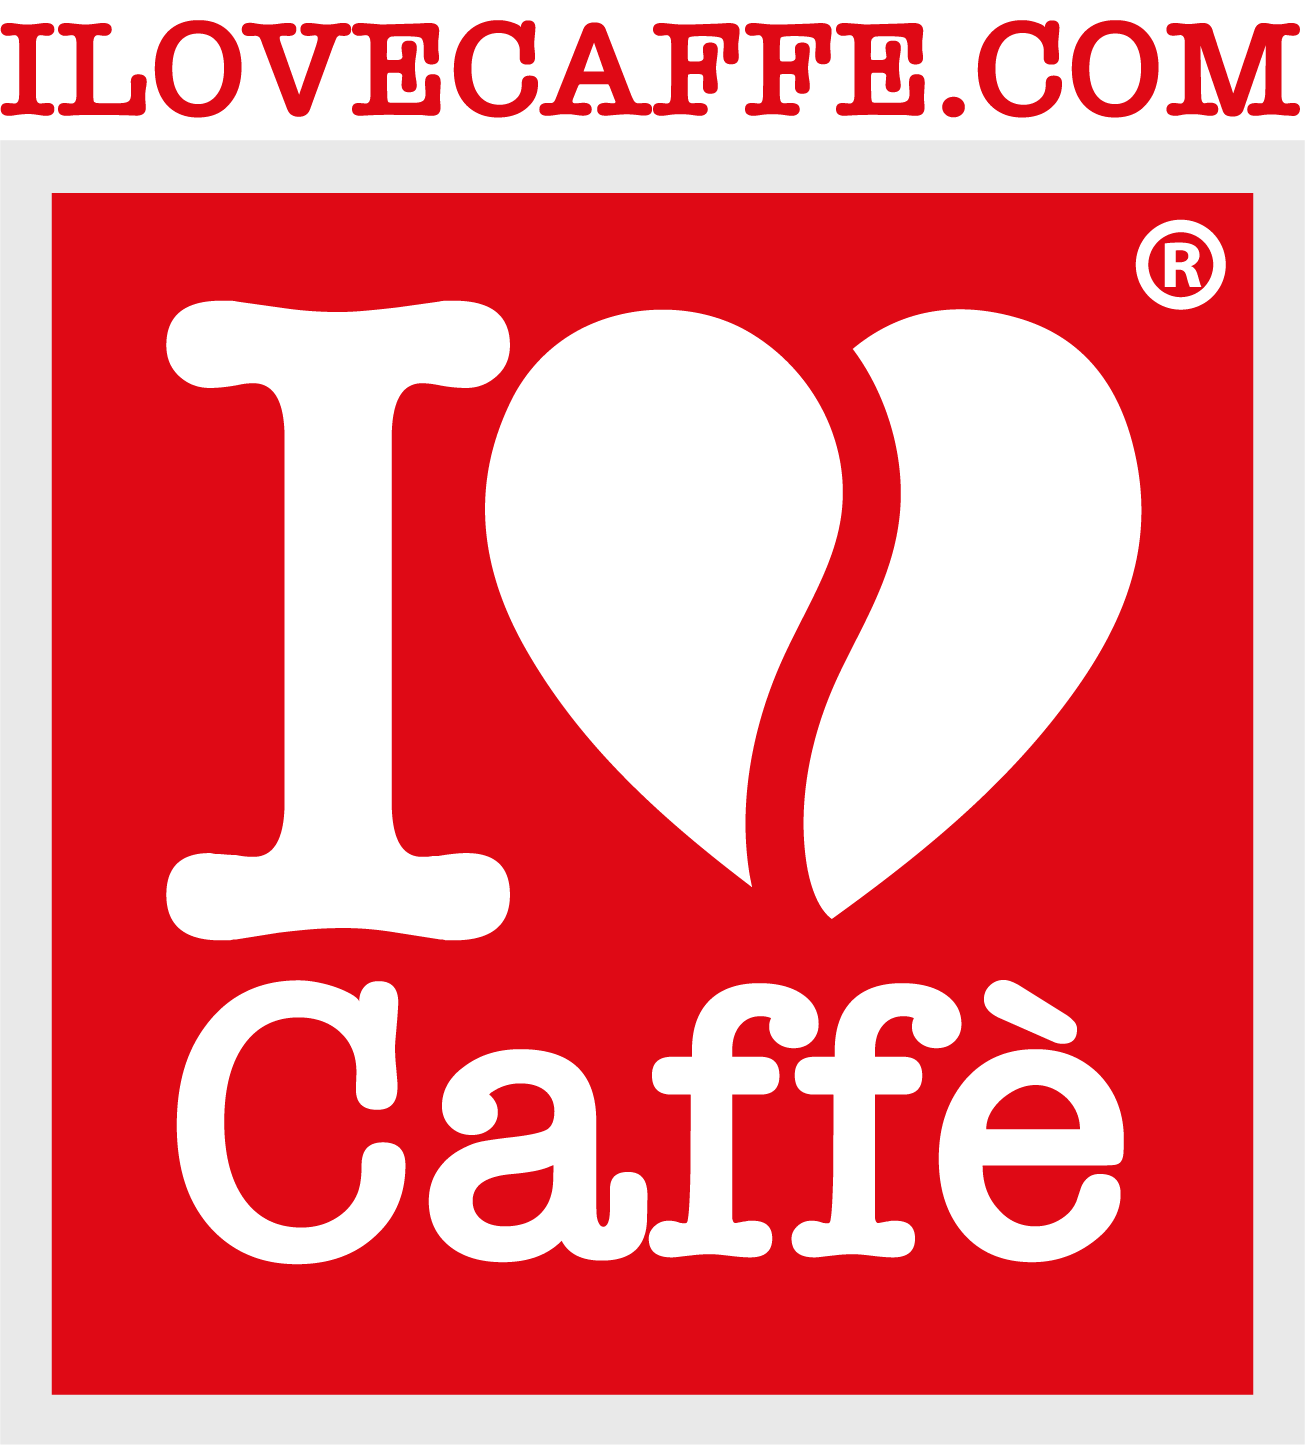 I Love Caffè